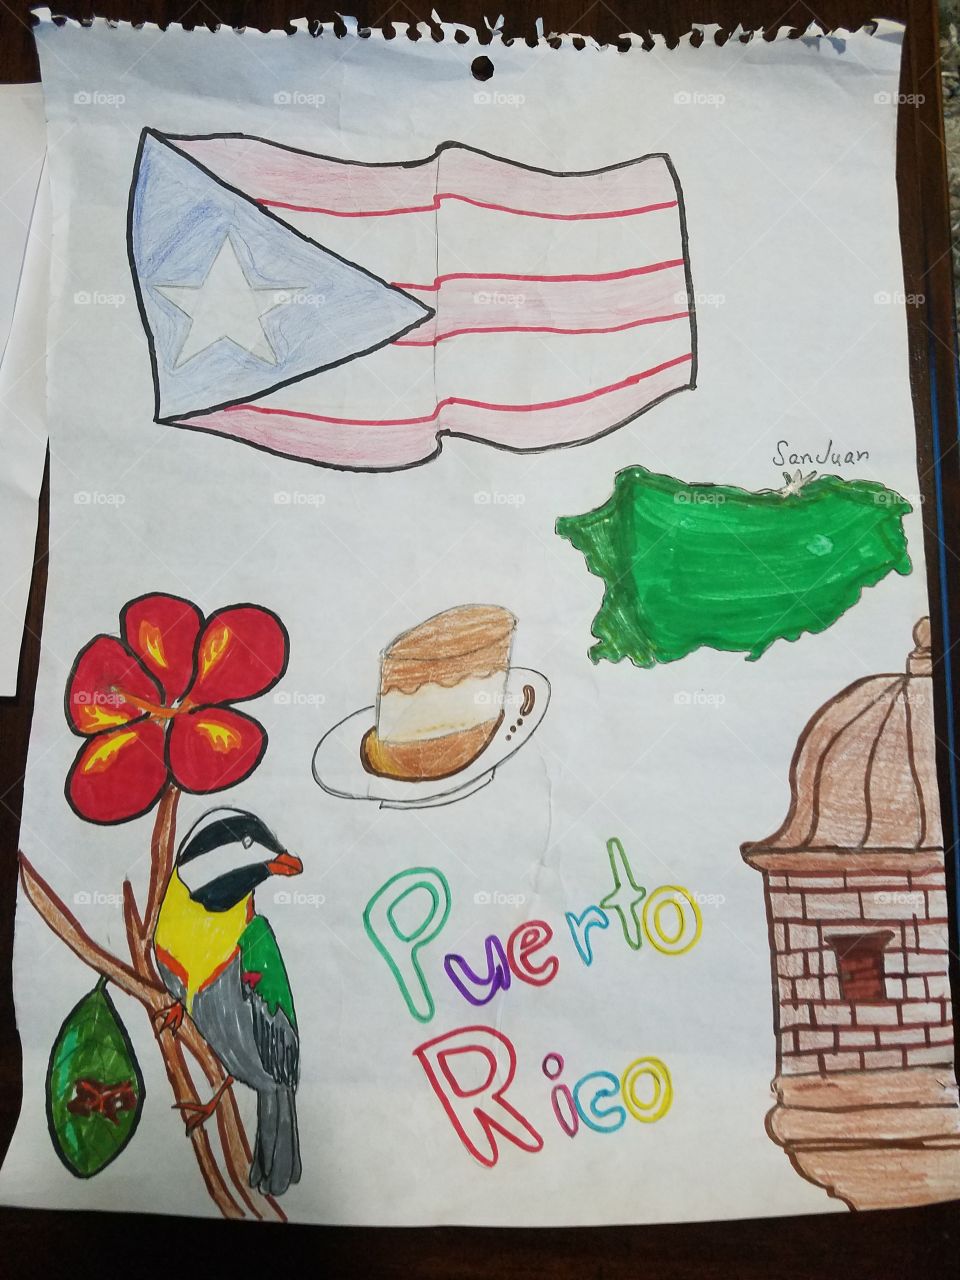 Heritage day ... Proud Puerto Rican.